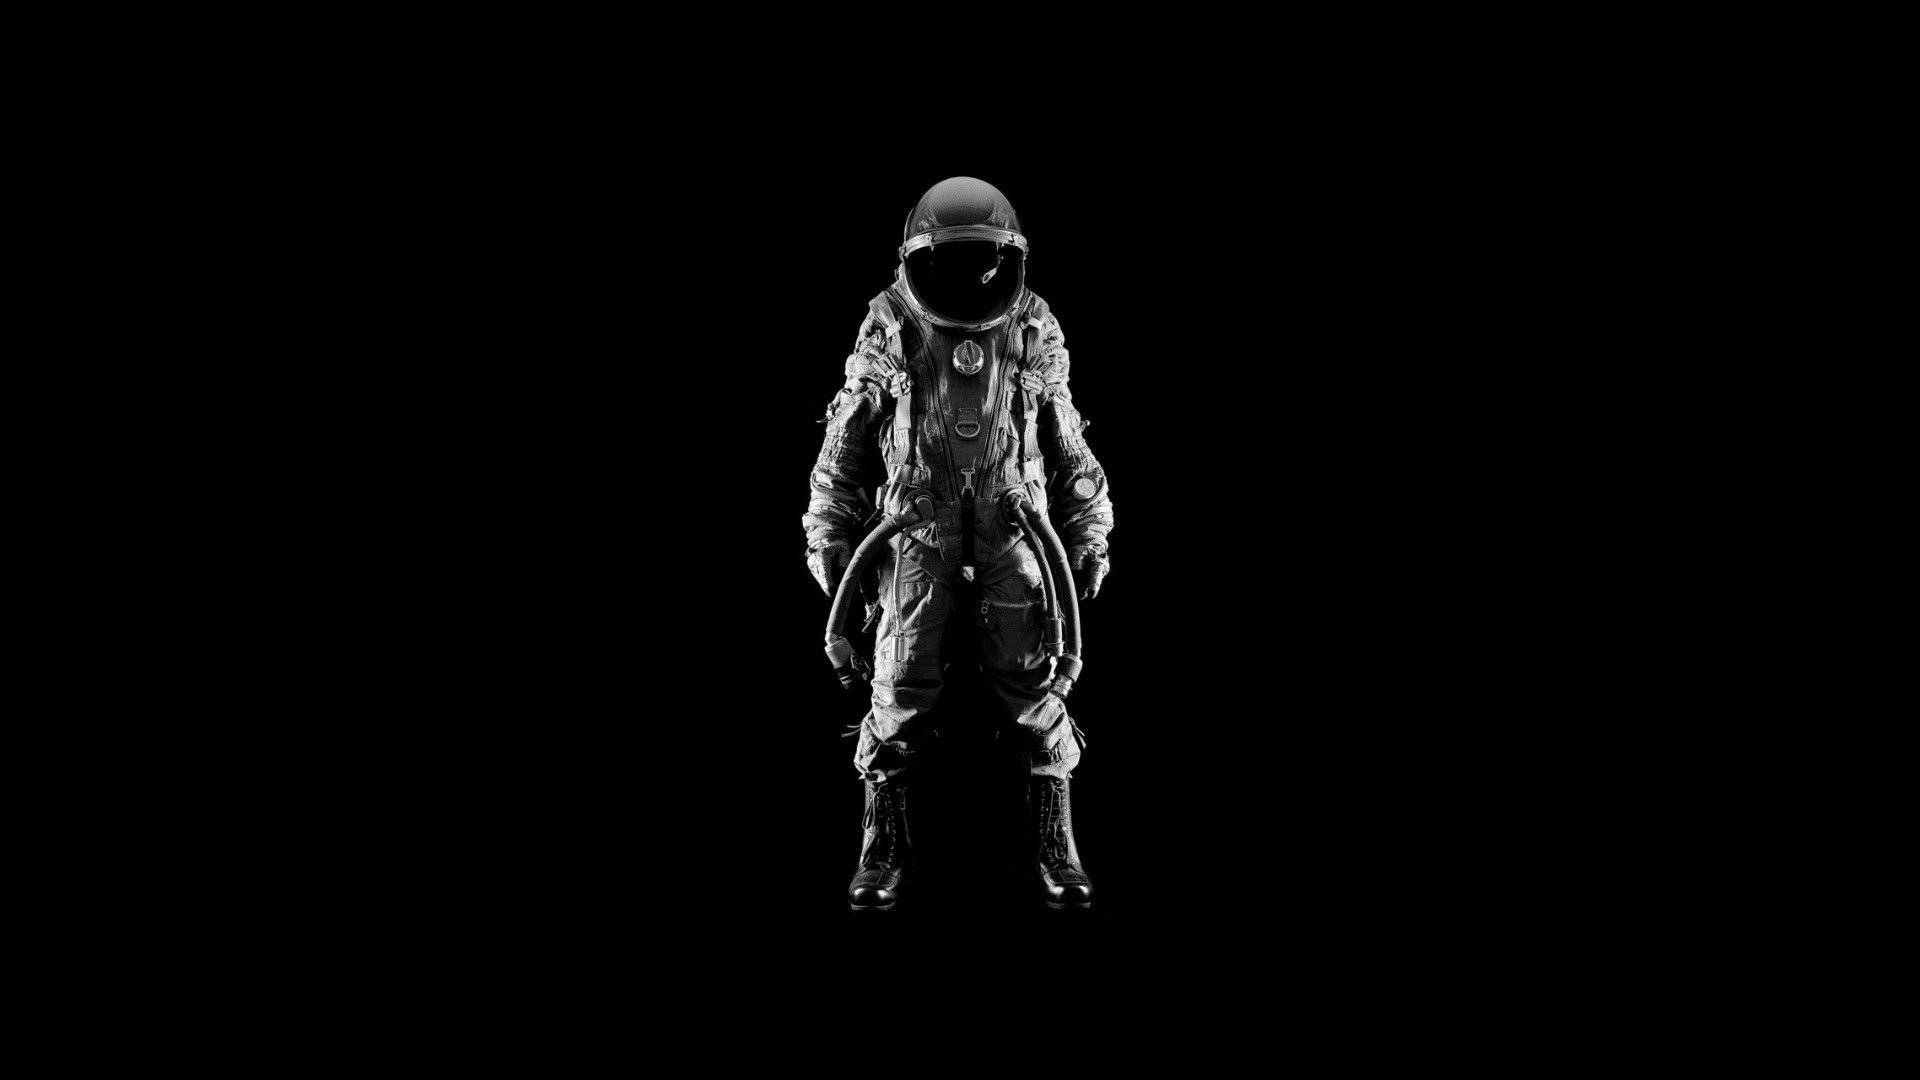 Astronaut Aesthetic In White Suit